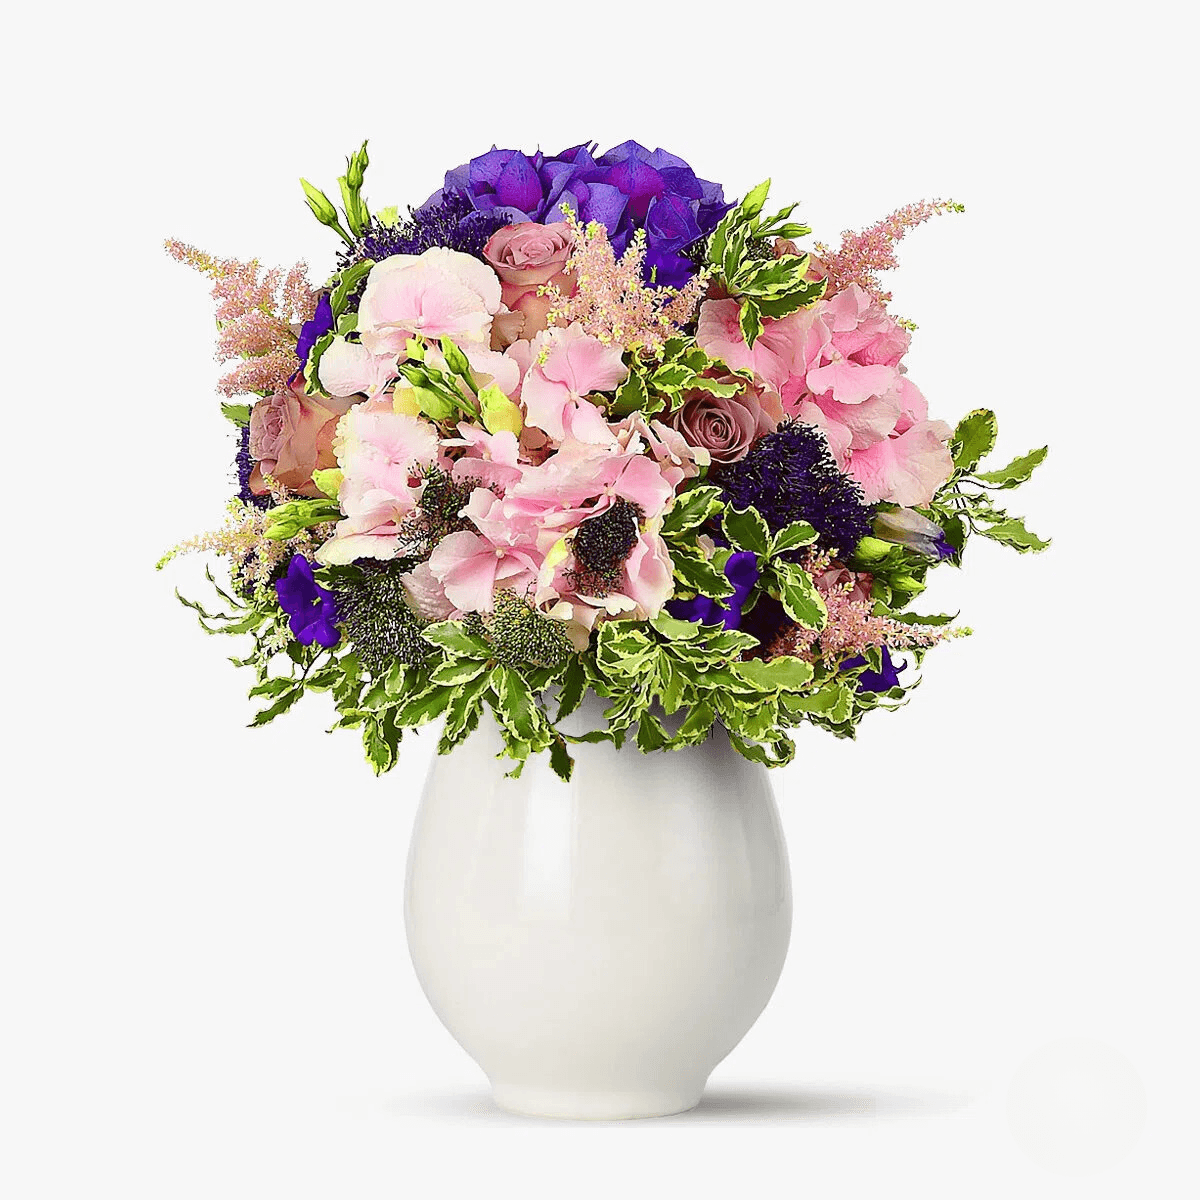 Buchet cu hortenise violet, hortensie roz, lisianthus violet, trahelium violet Poveste delicata